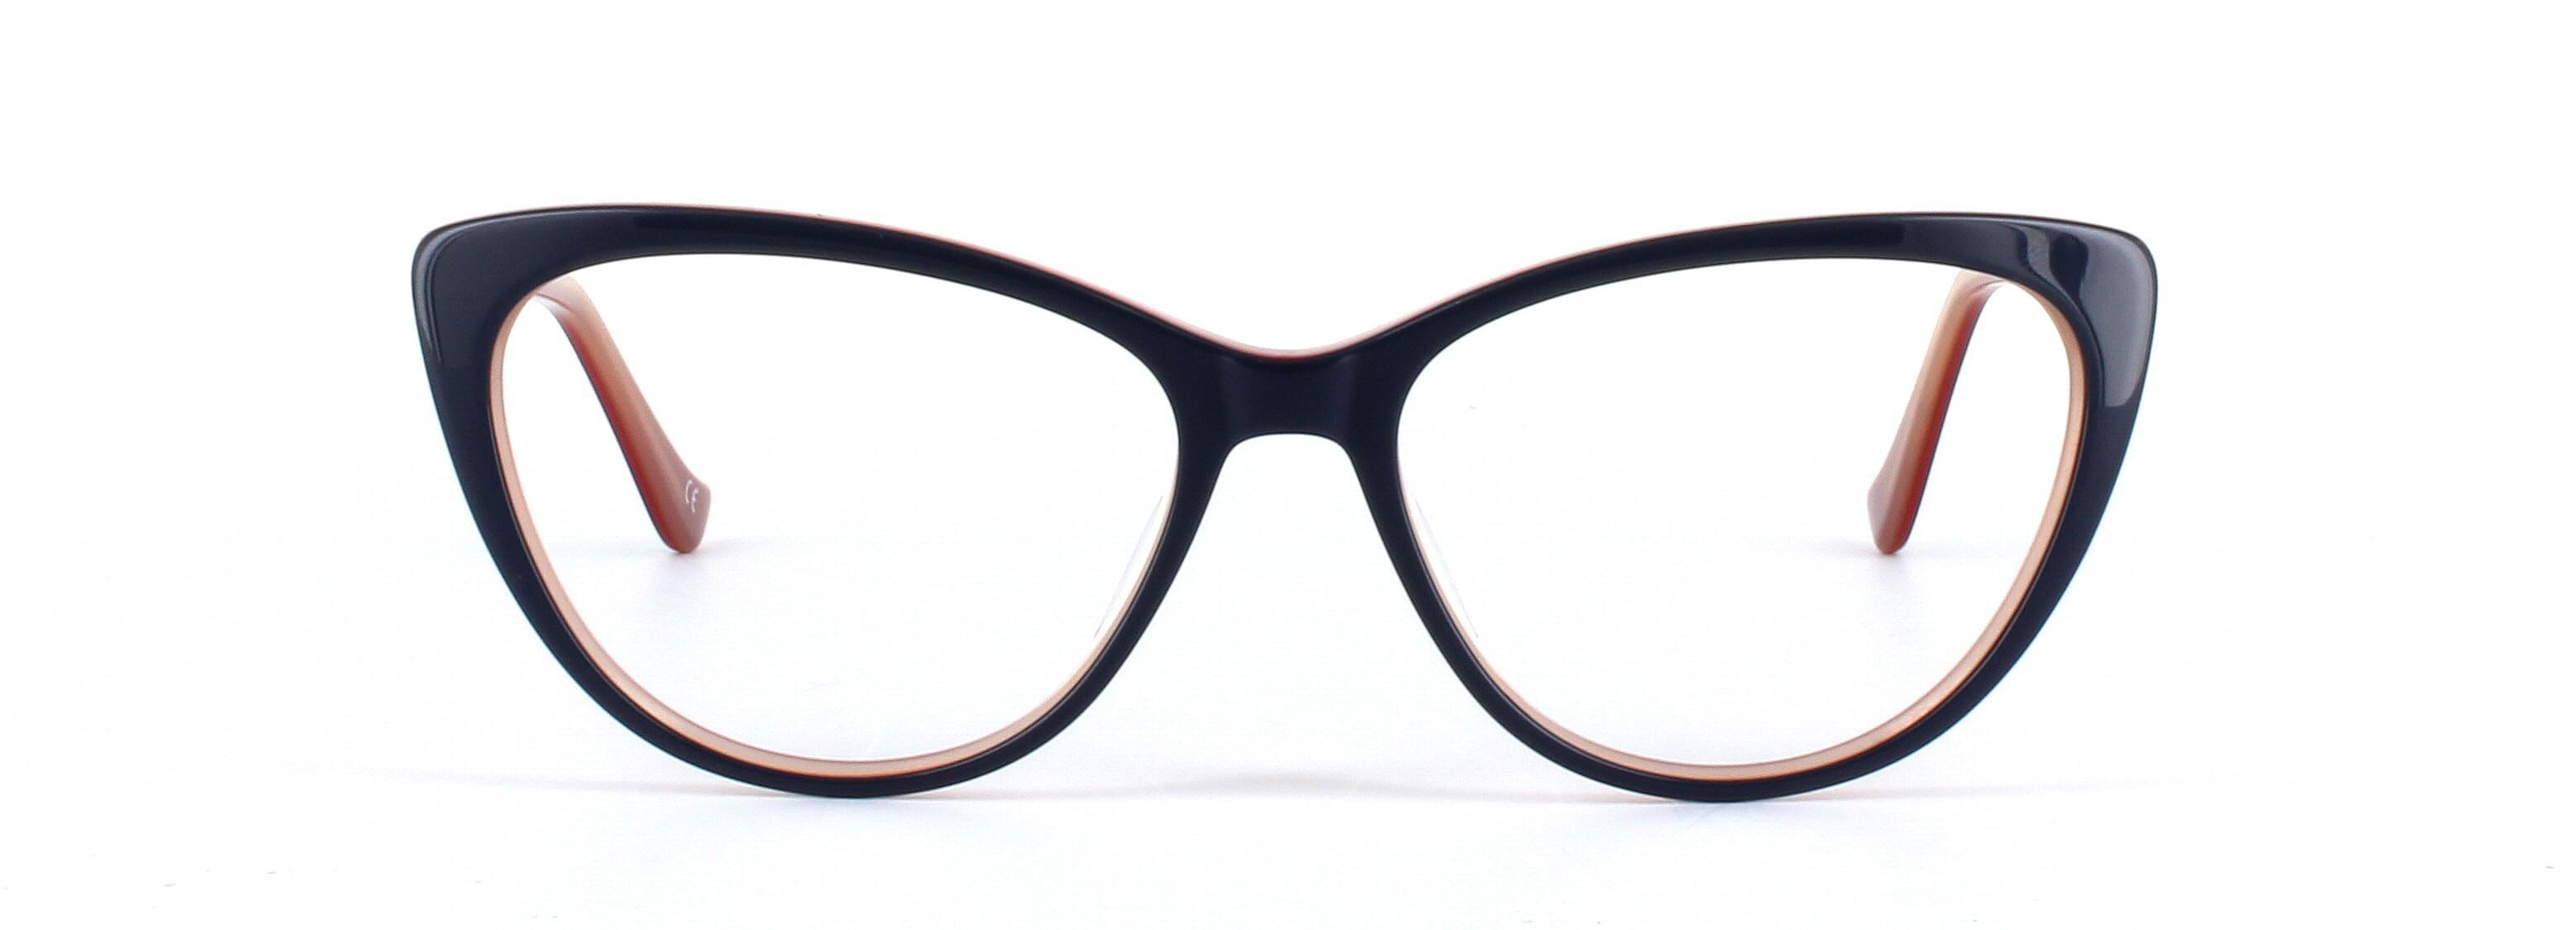 Lydia Blue Full Rim Cat Eye Acetate Glasses - Image View 5